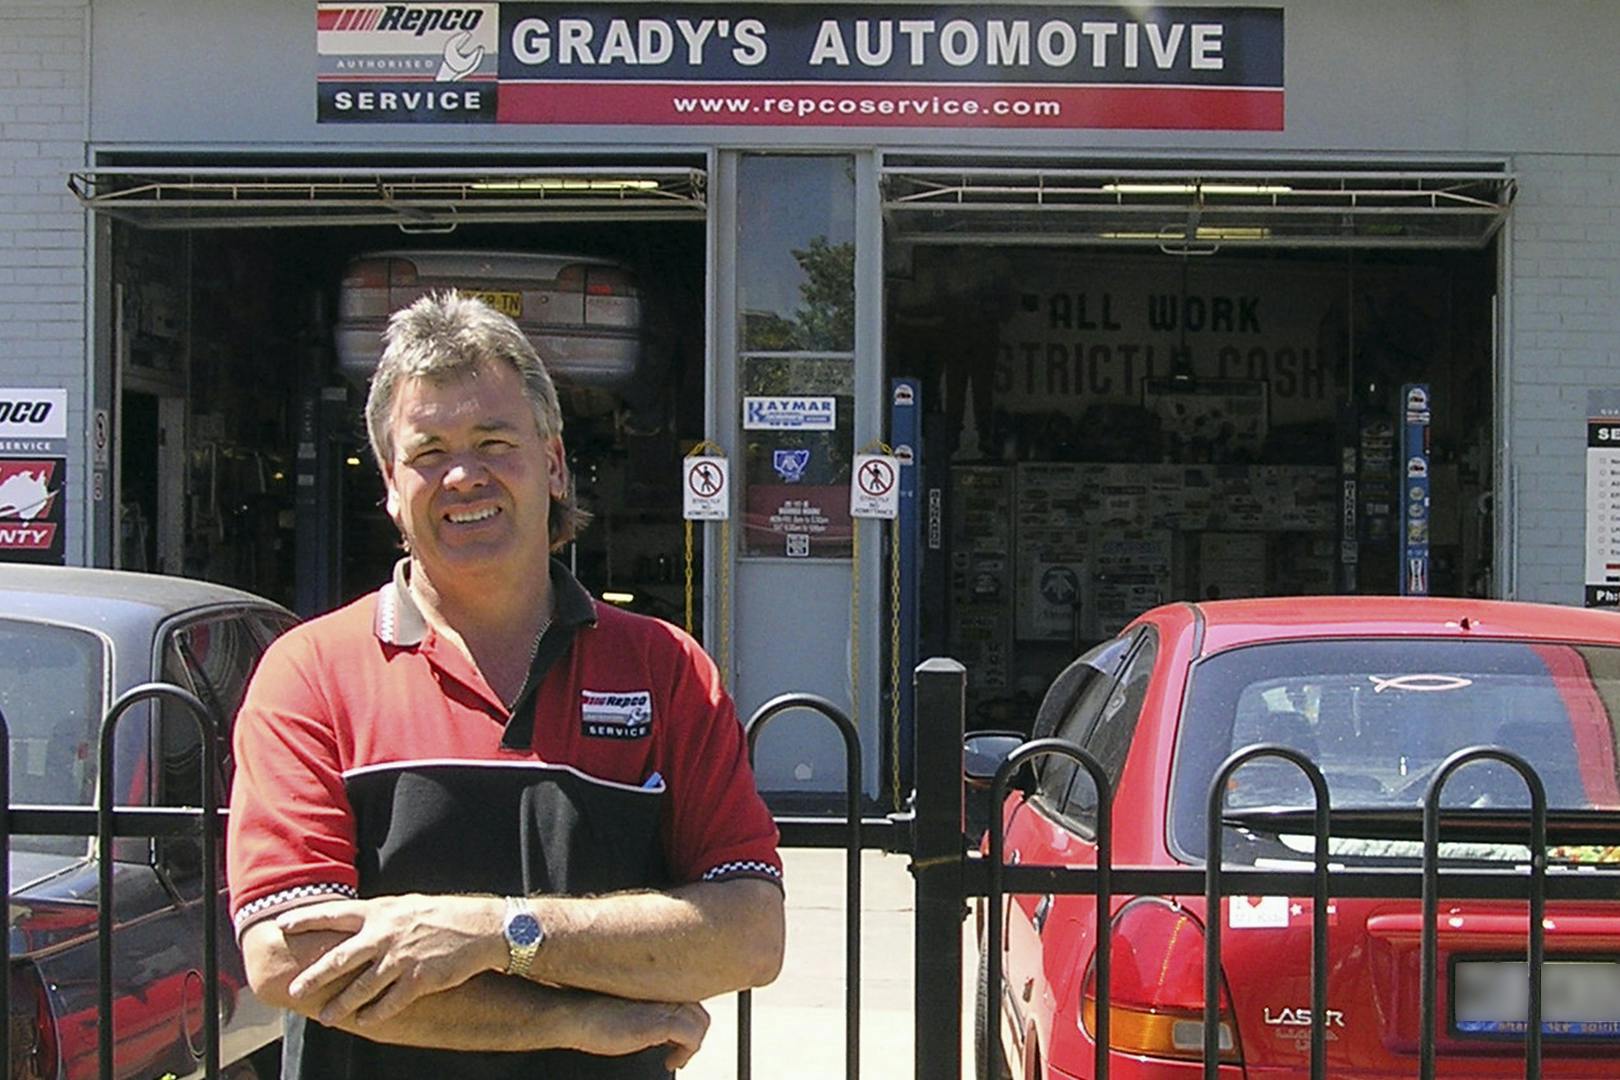 Gradys Automotive profile photo